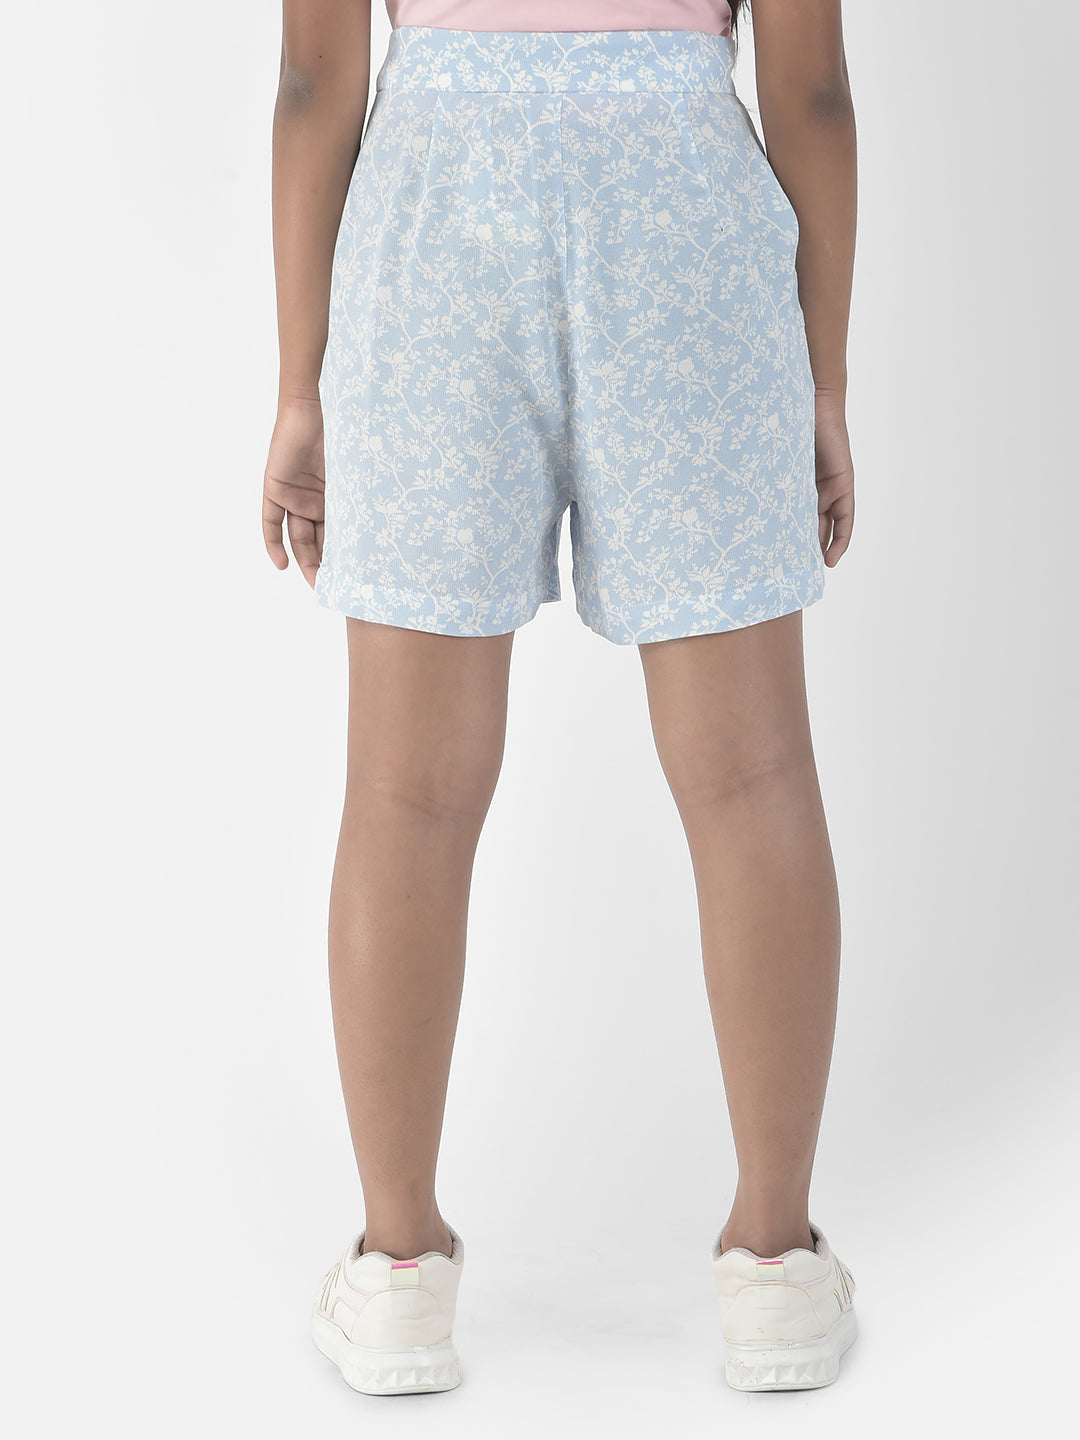   Sky Blue Floral Shorts